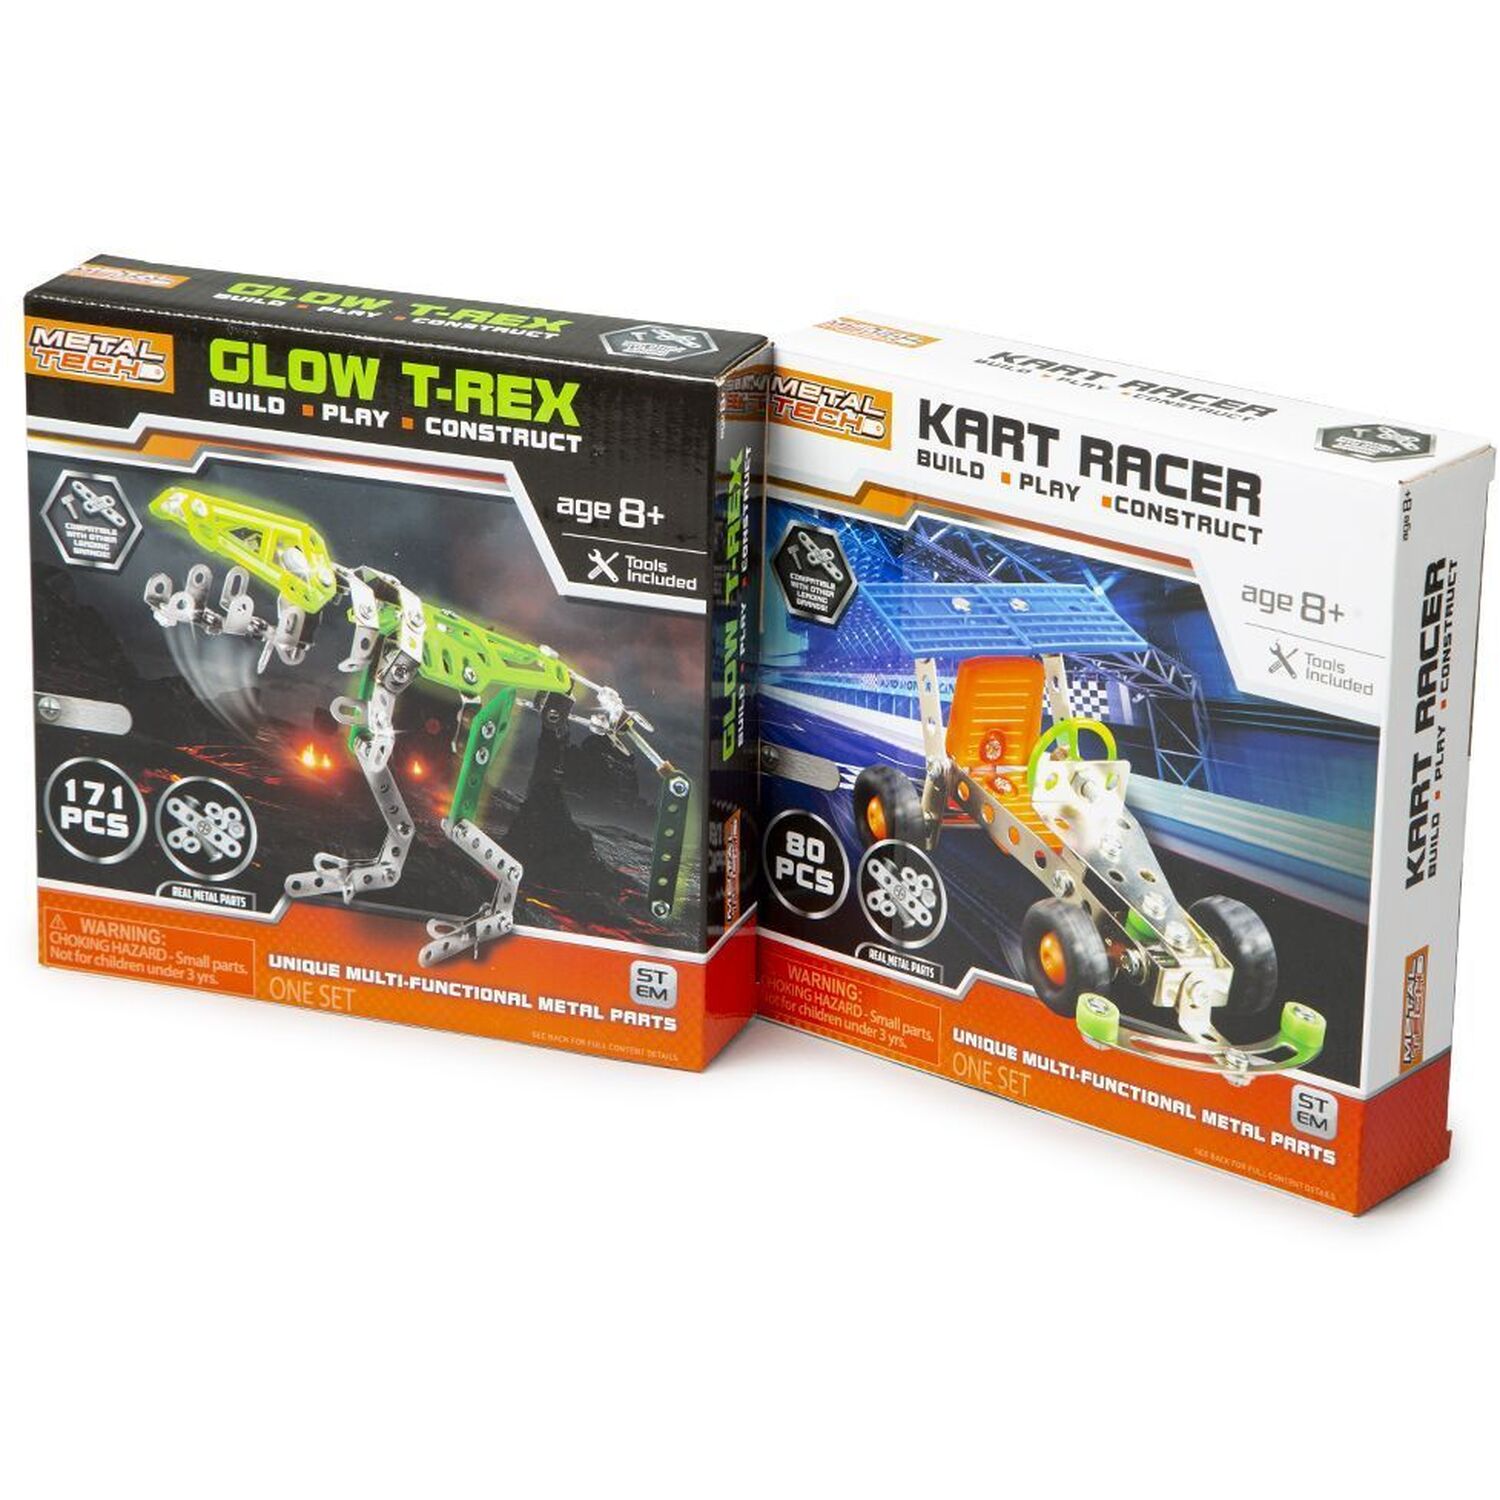 Metal Tech Glow T-Rex / Kart Racer Construction Kit Image